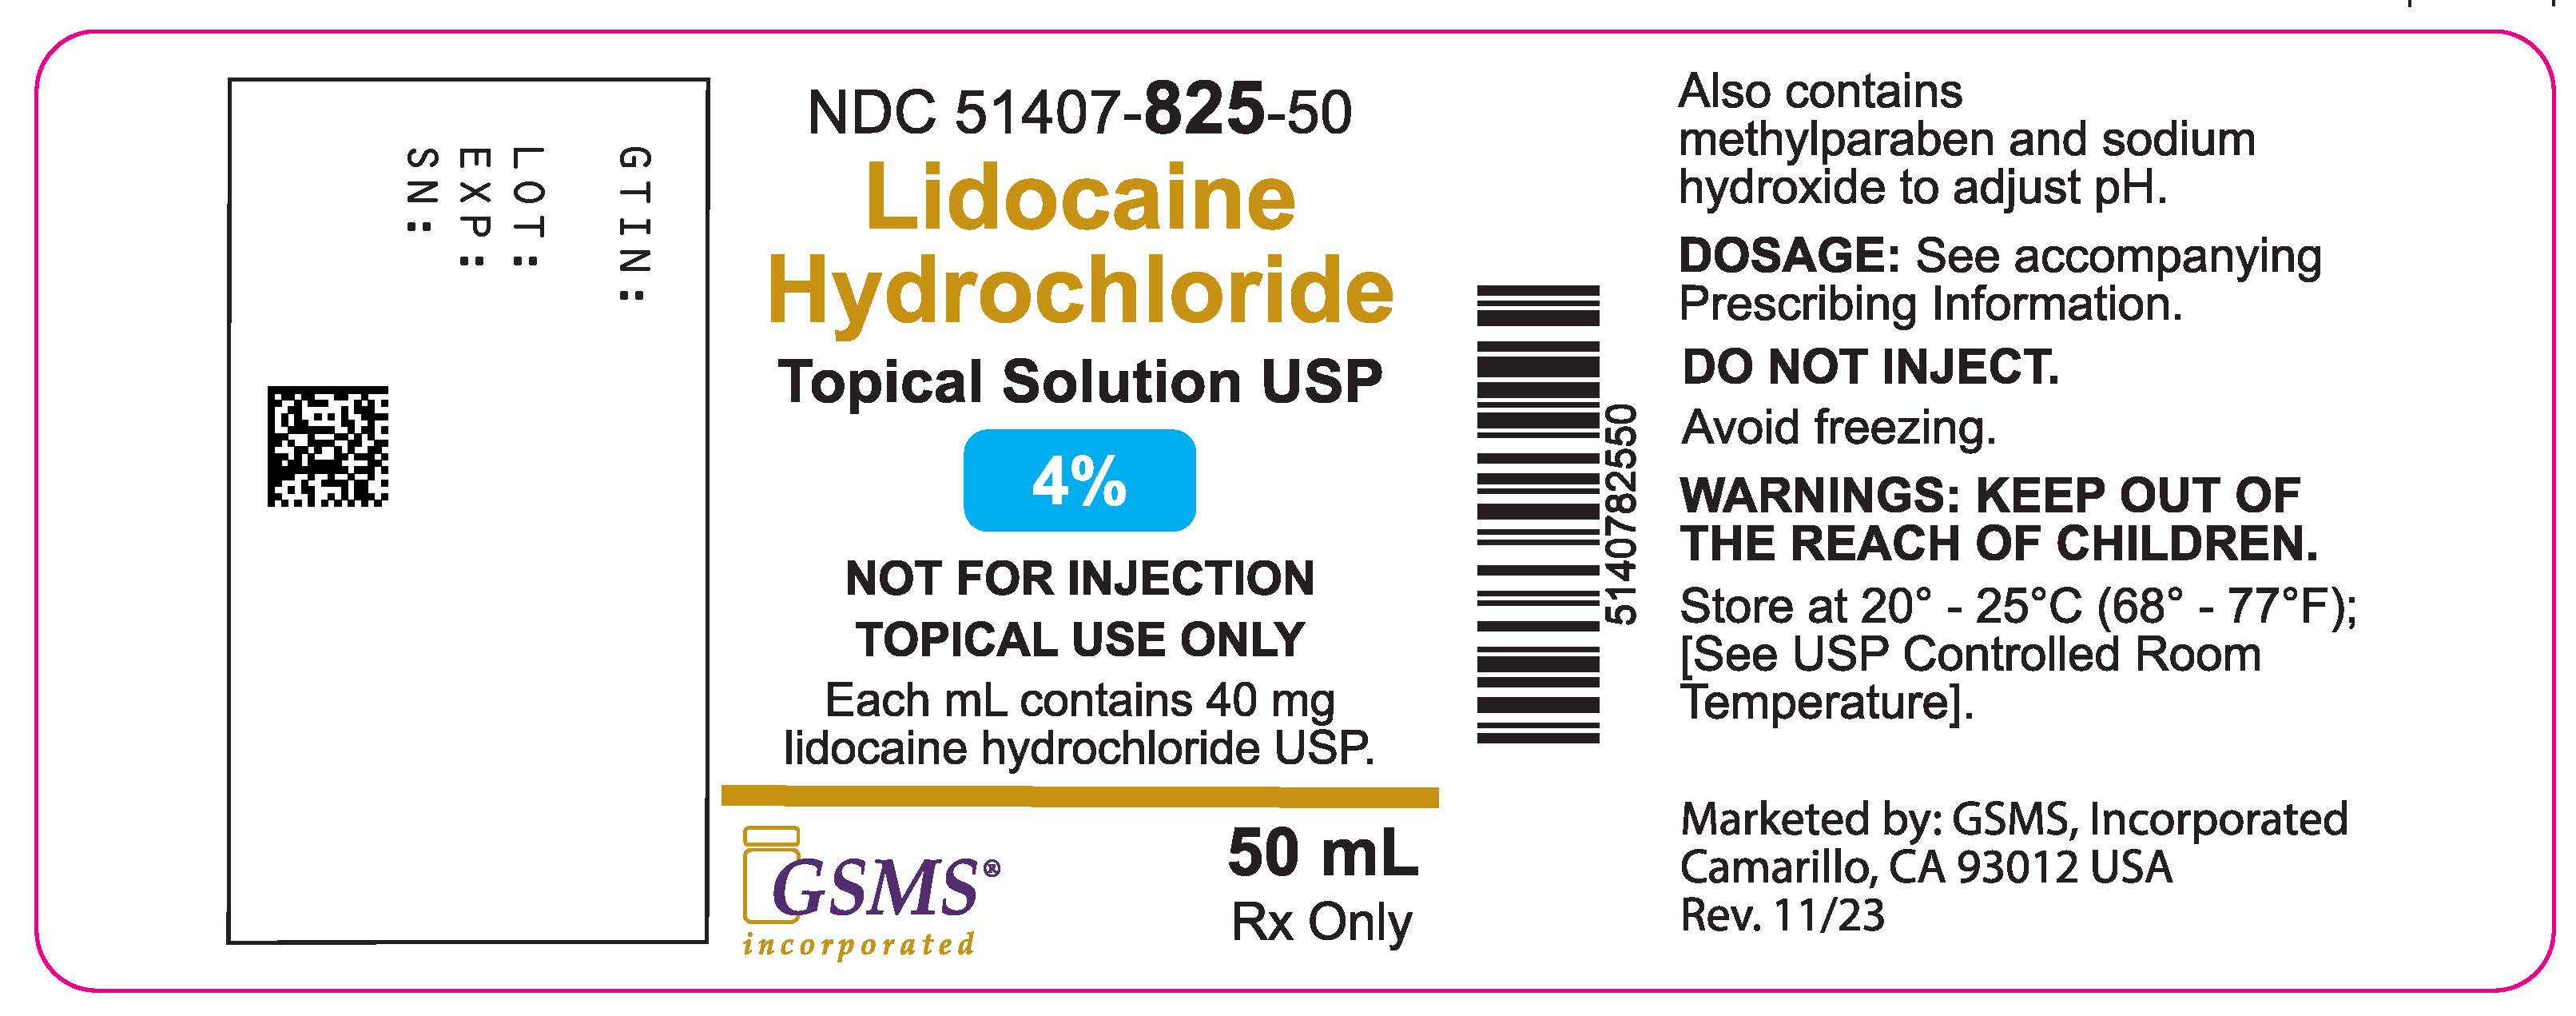 51407-825-50OL - Lidcoaine HCl Topical - Rev. 1123.jpg